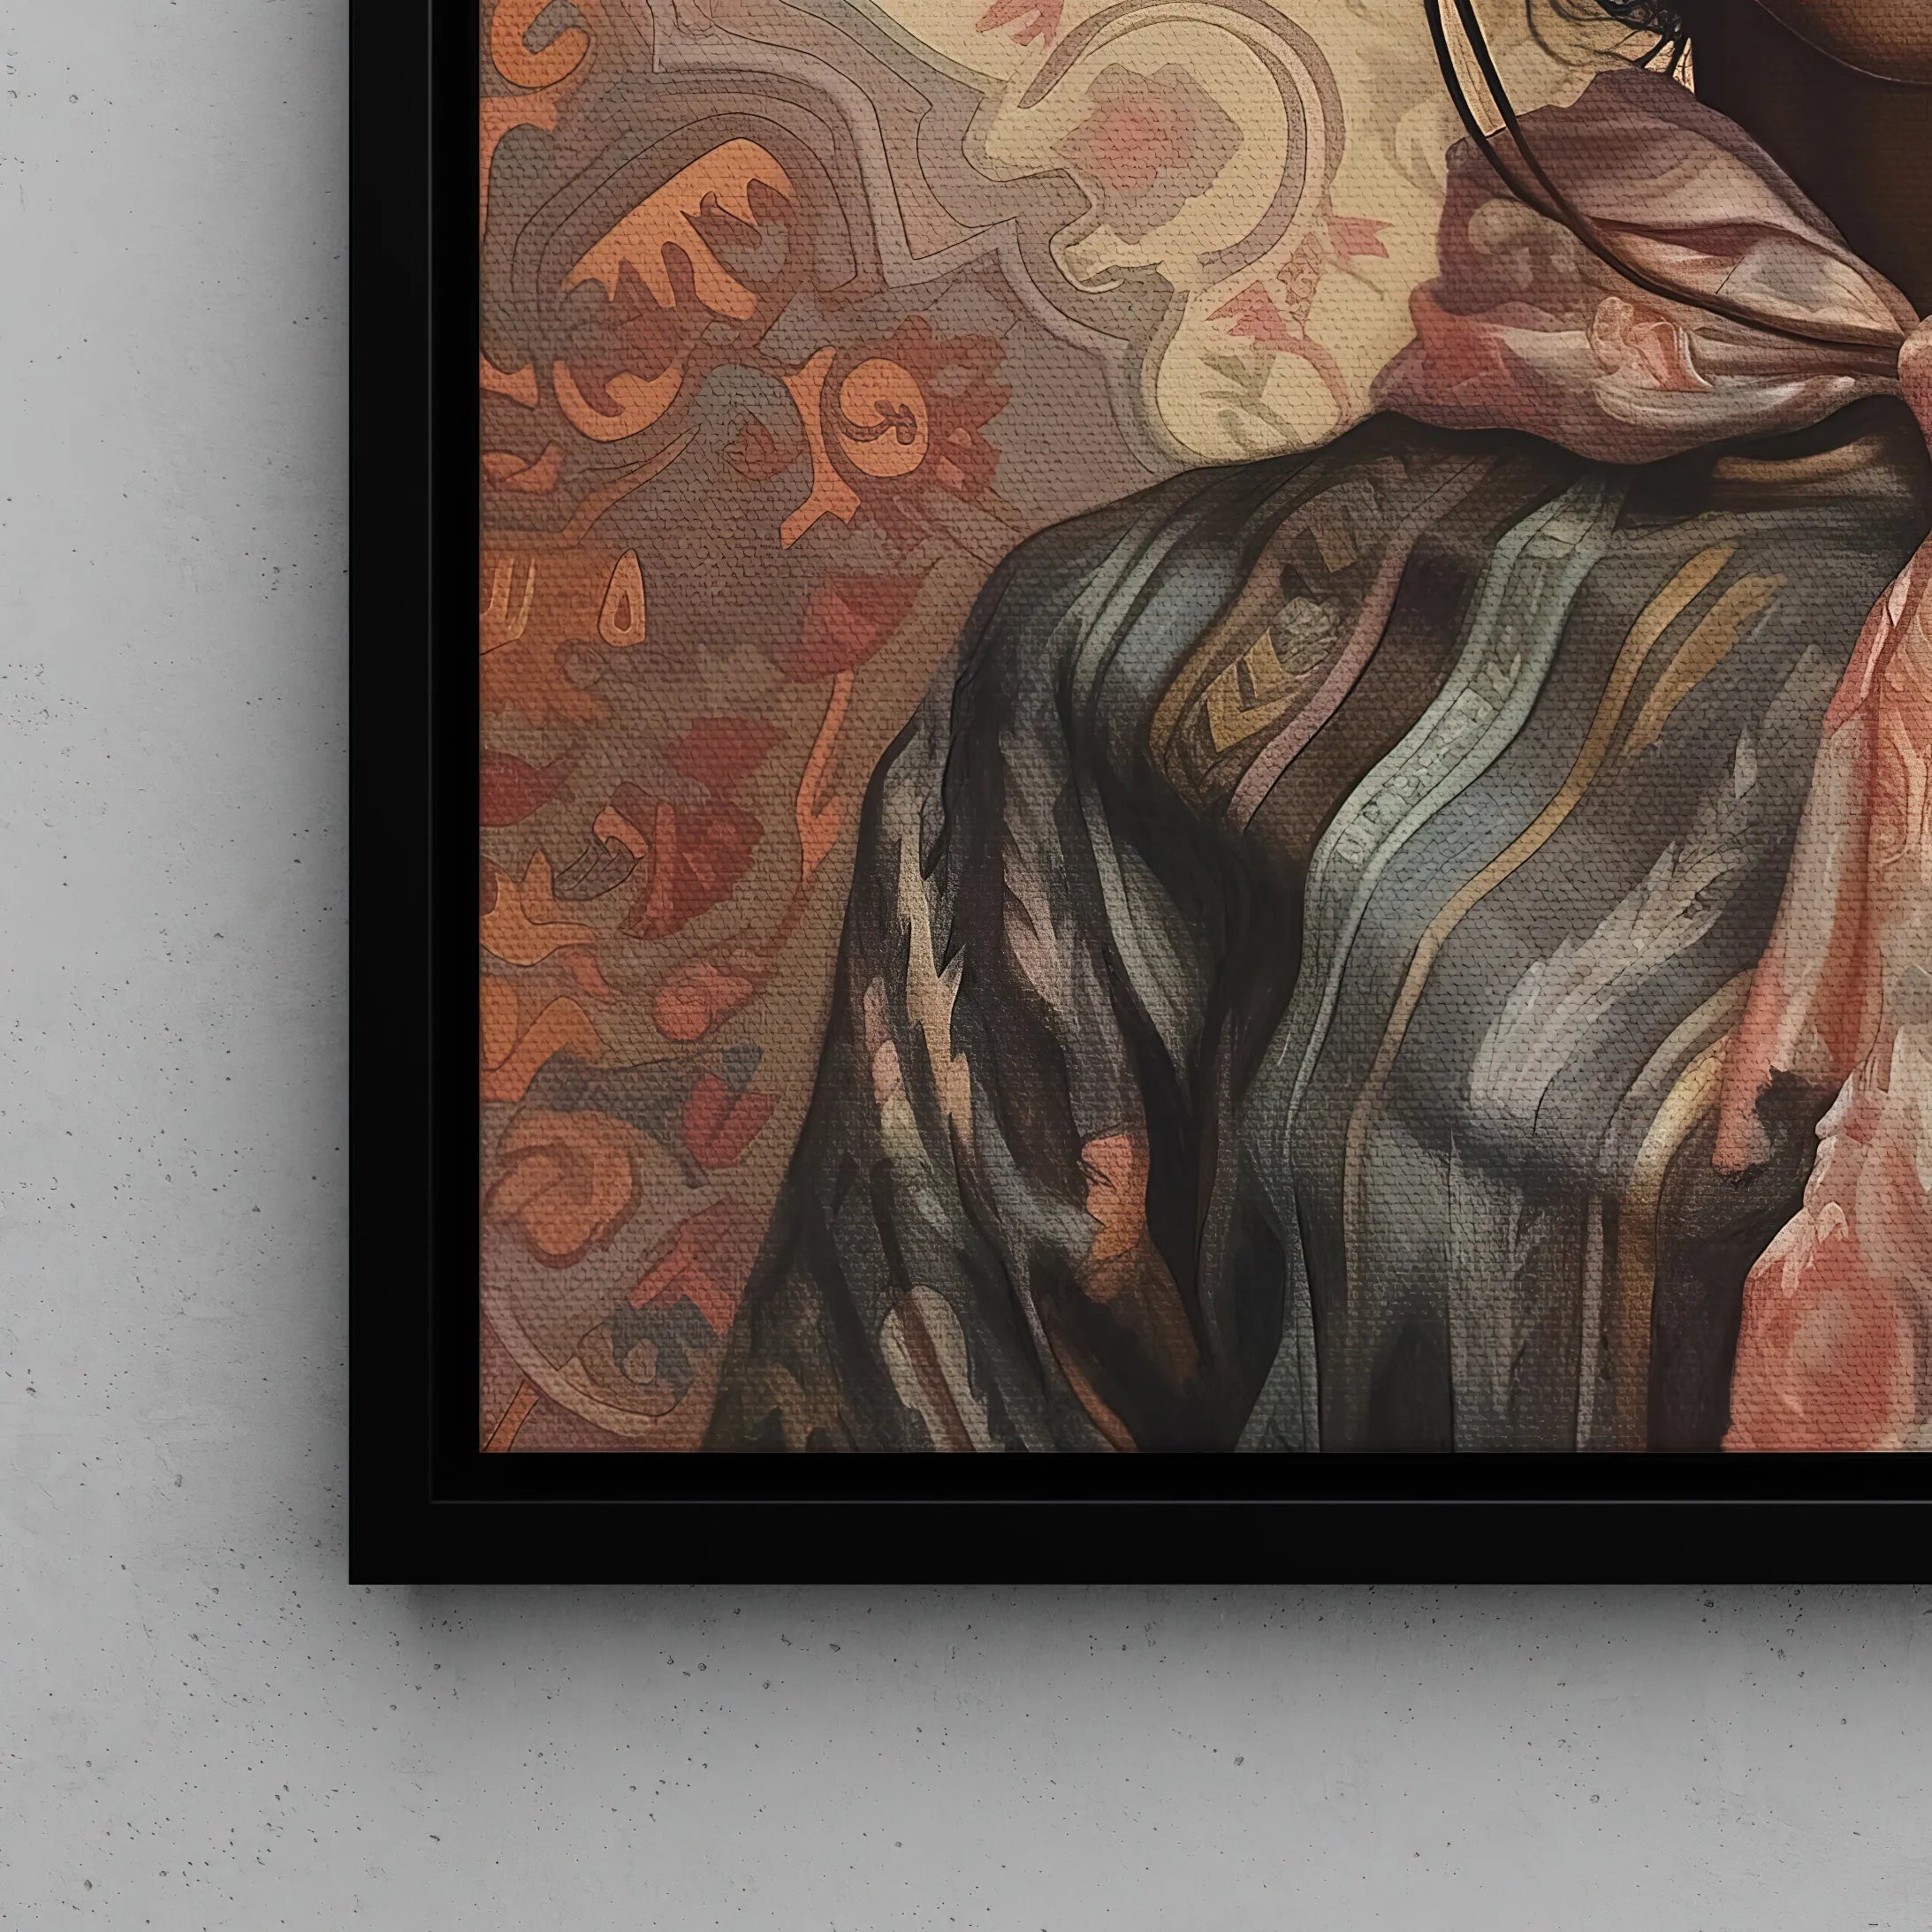 Sadie - Lesbian Black Cowgirl Framed Canvas - Sapphic Art - Posters Prints & Visual Artwork - Aesthetic Art